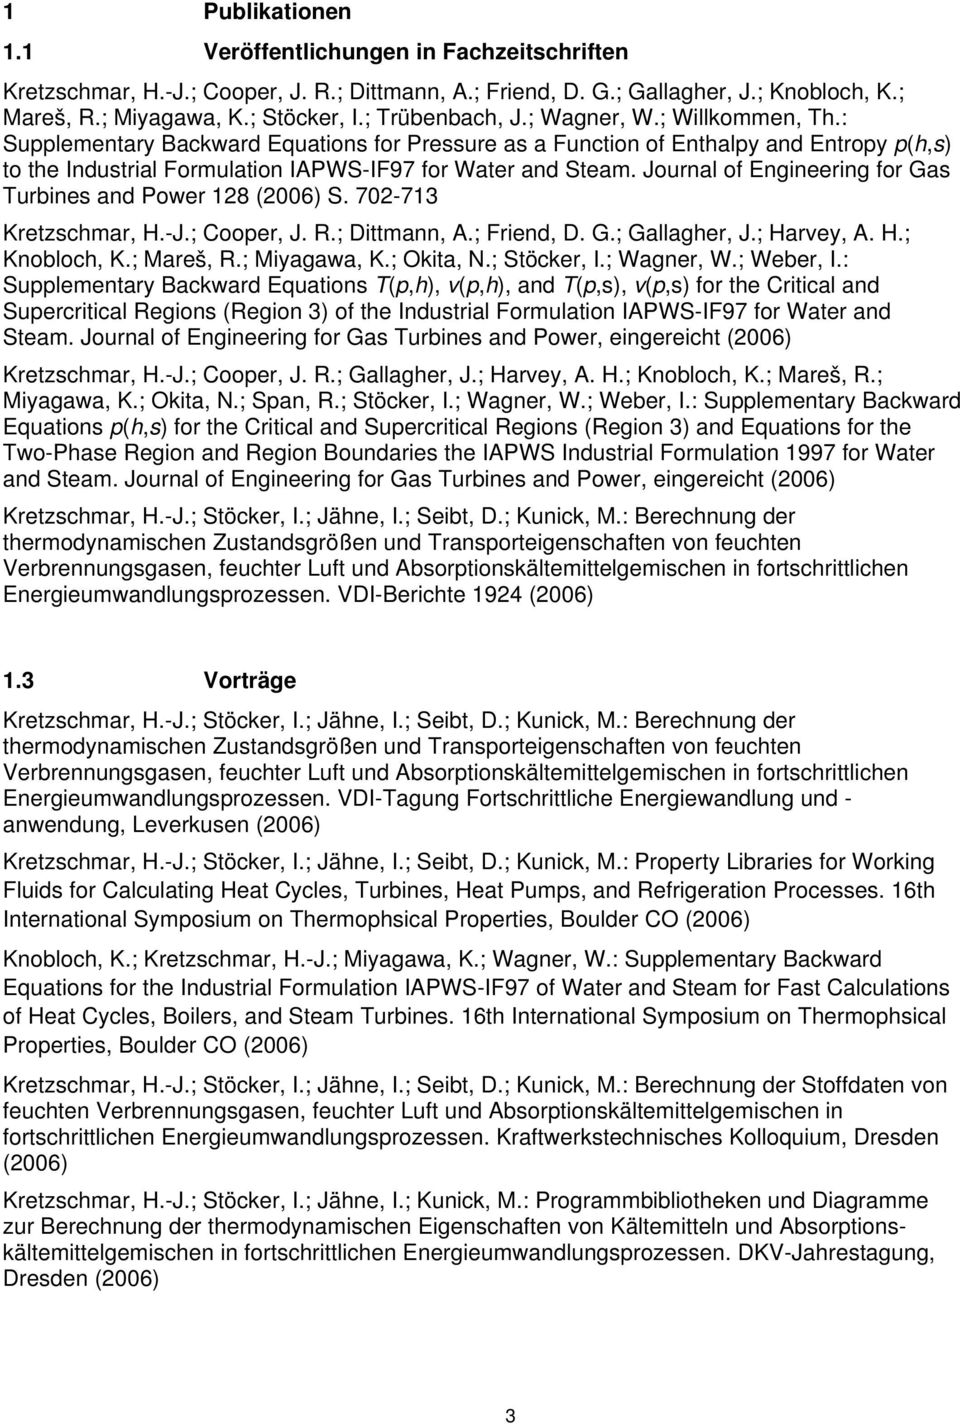 Journal of Engineering for Gas Turbines and Power 128 (2006) S. 702-713 Kretzschmar, H.-J.; Cooper, J. R.; Dittmann, A.; Friend, D. G.; Gallagher, J.; Harvey, A. H.; Knobloch, K.; Mareš, R.